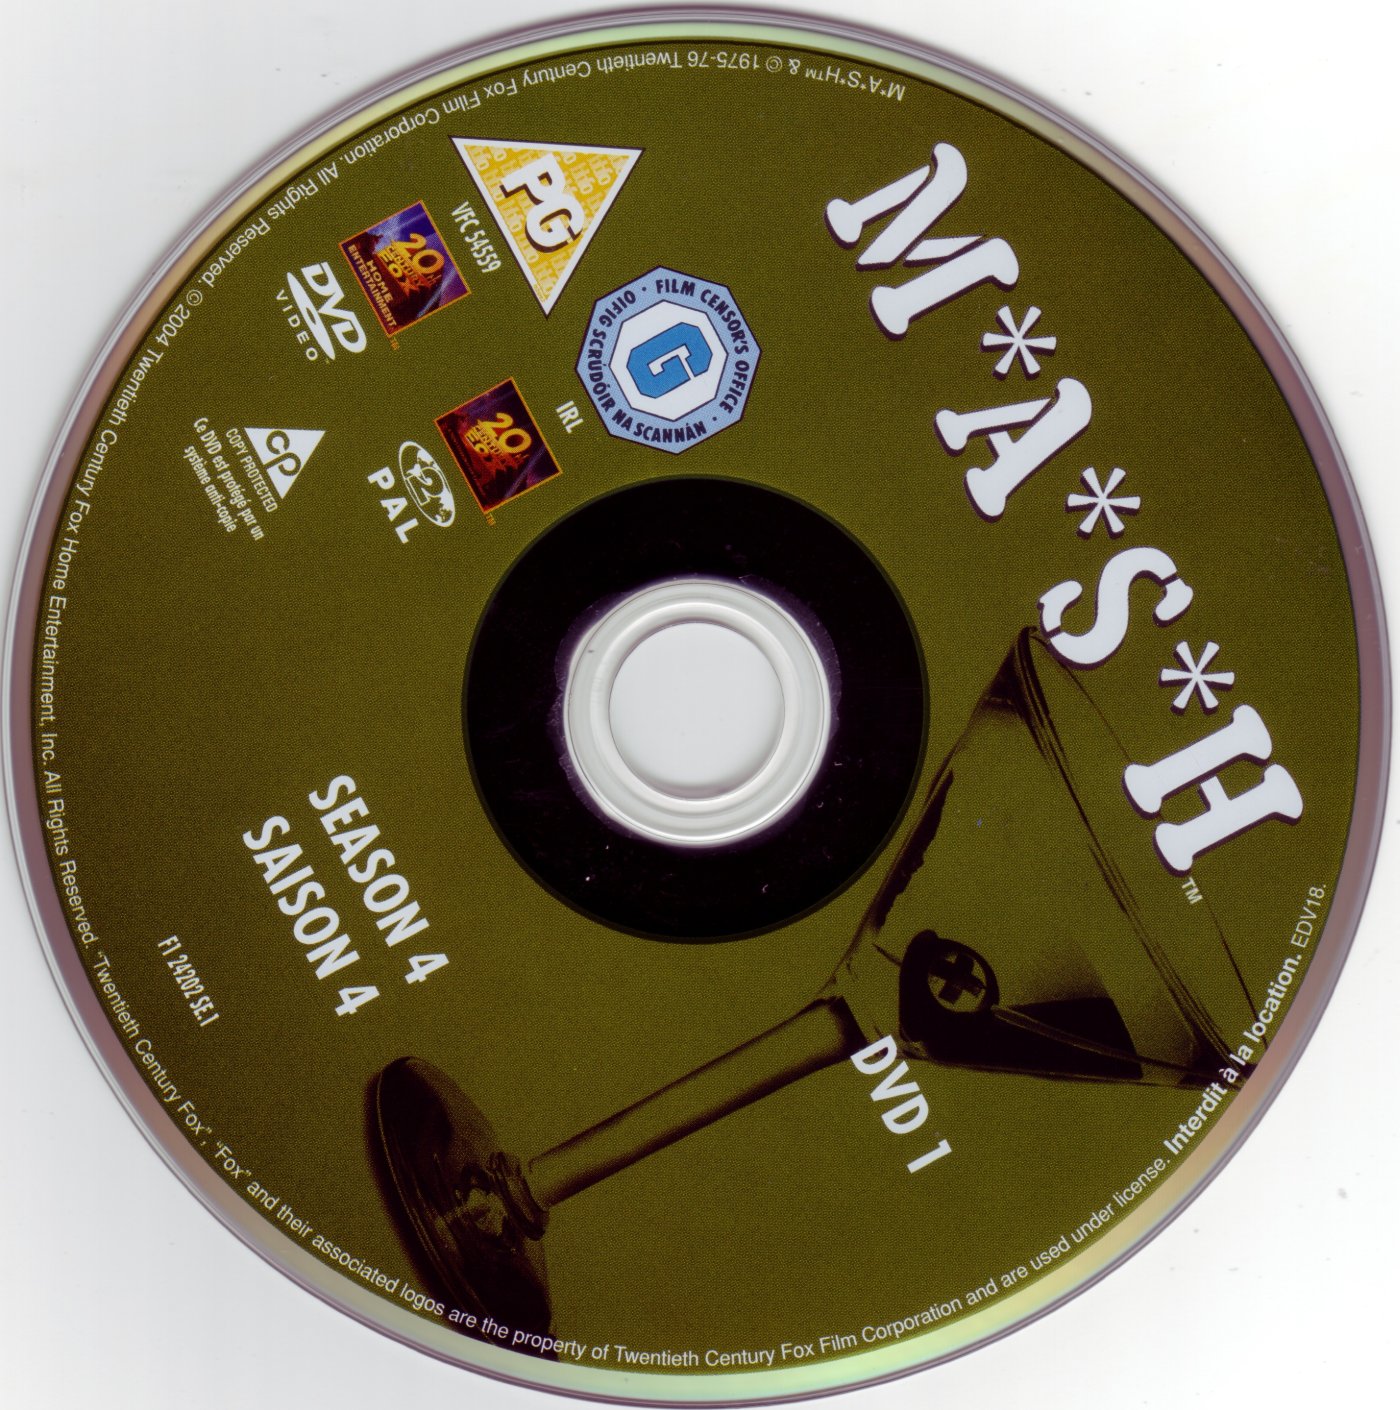 MASH Saison 4 DVD 1